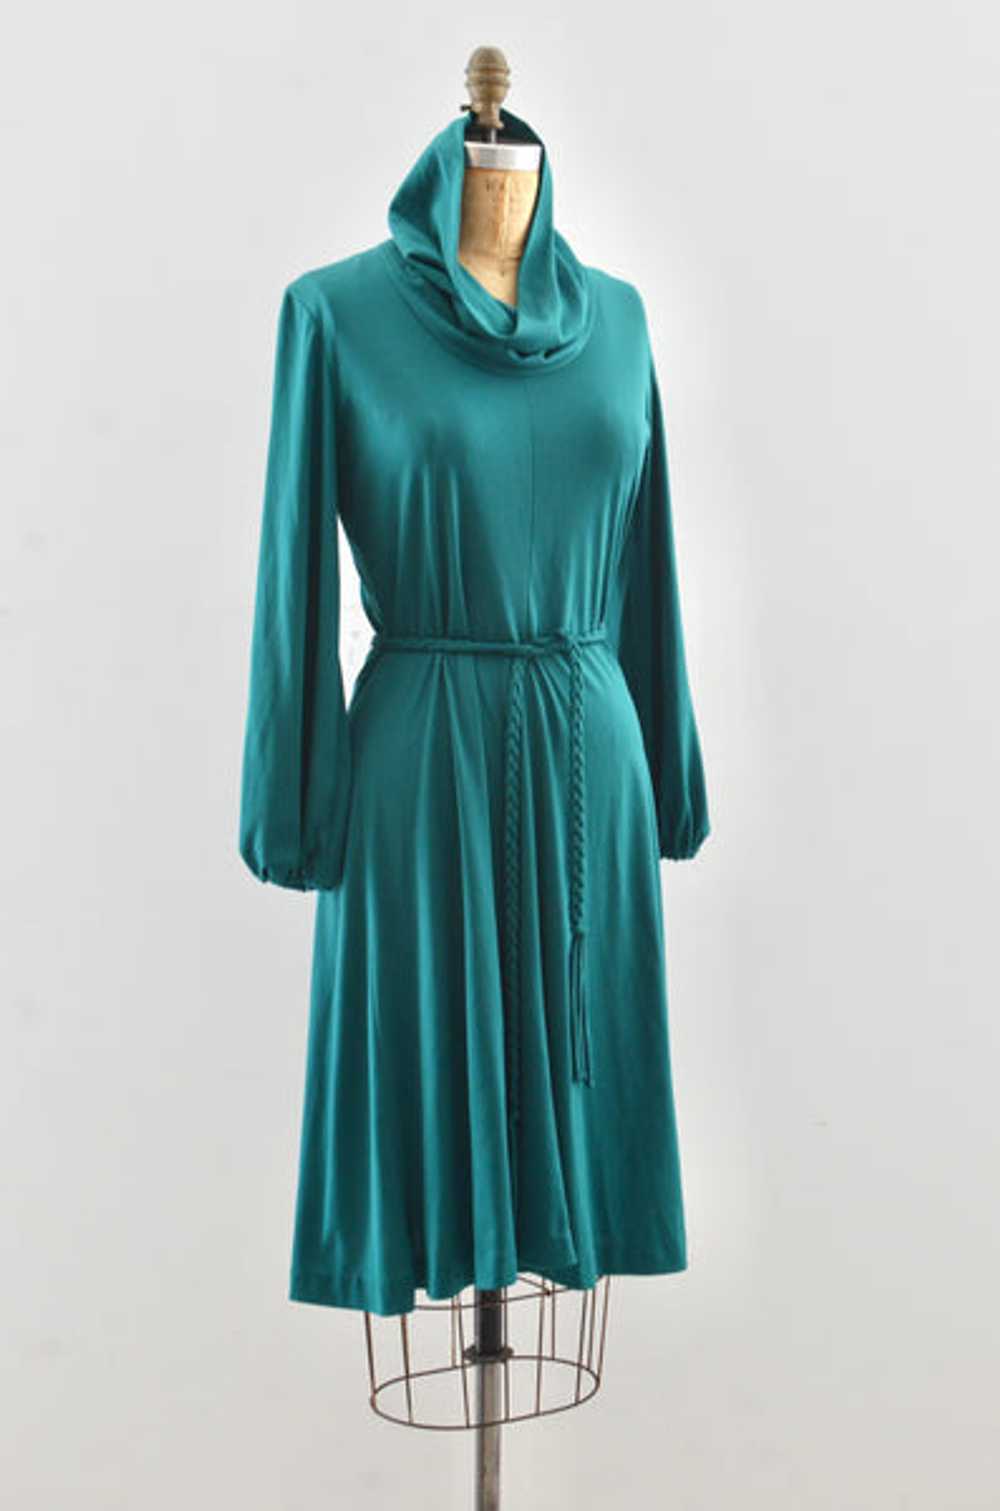 70's Jewel Green Dress - image 5